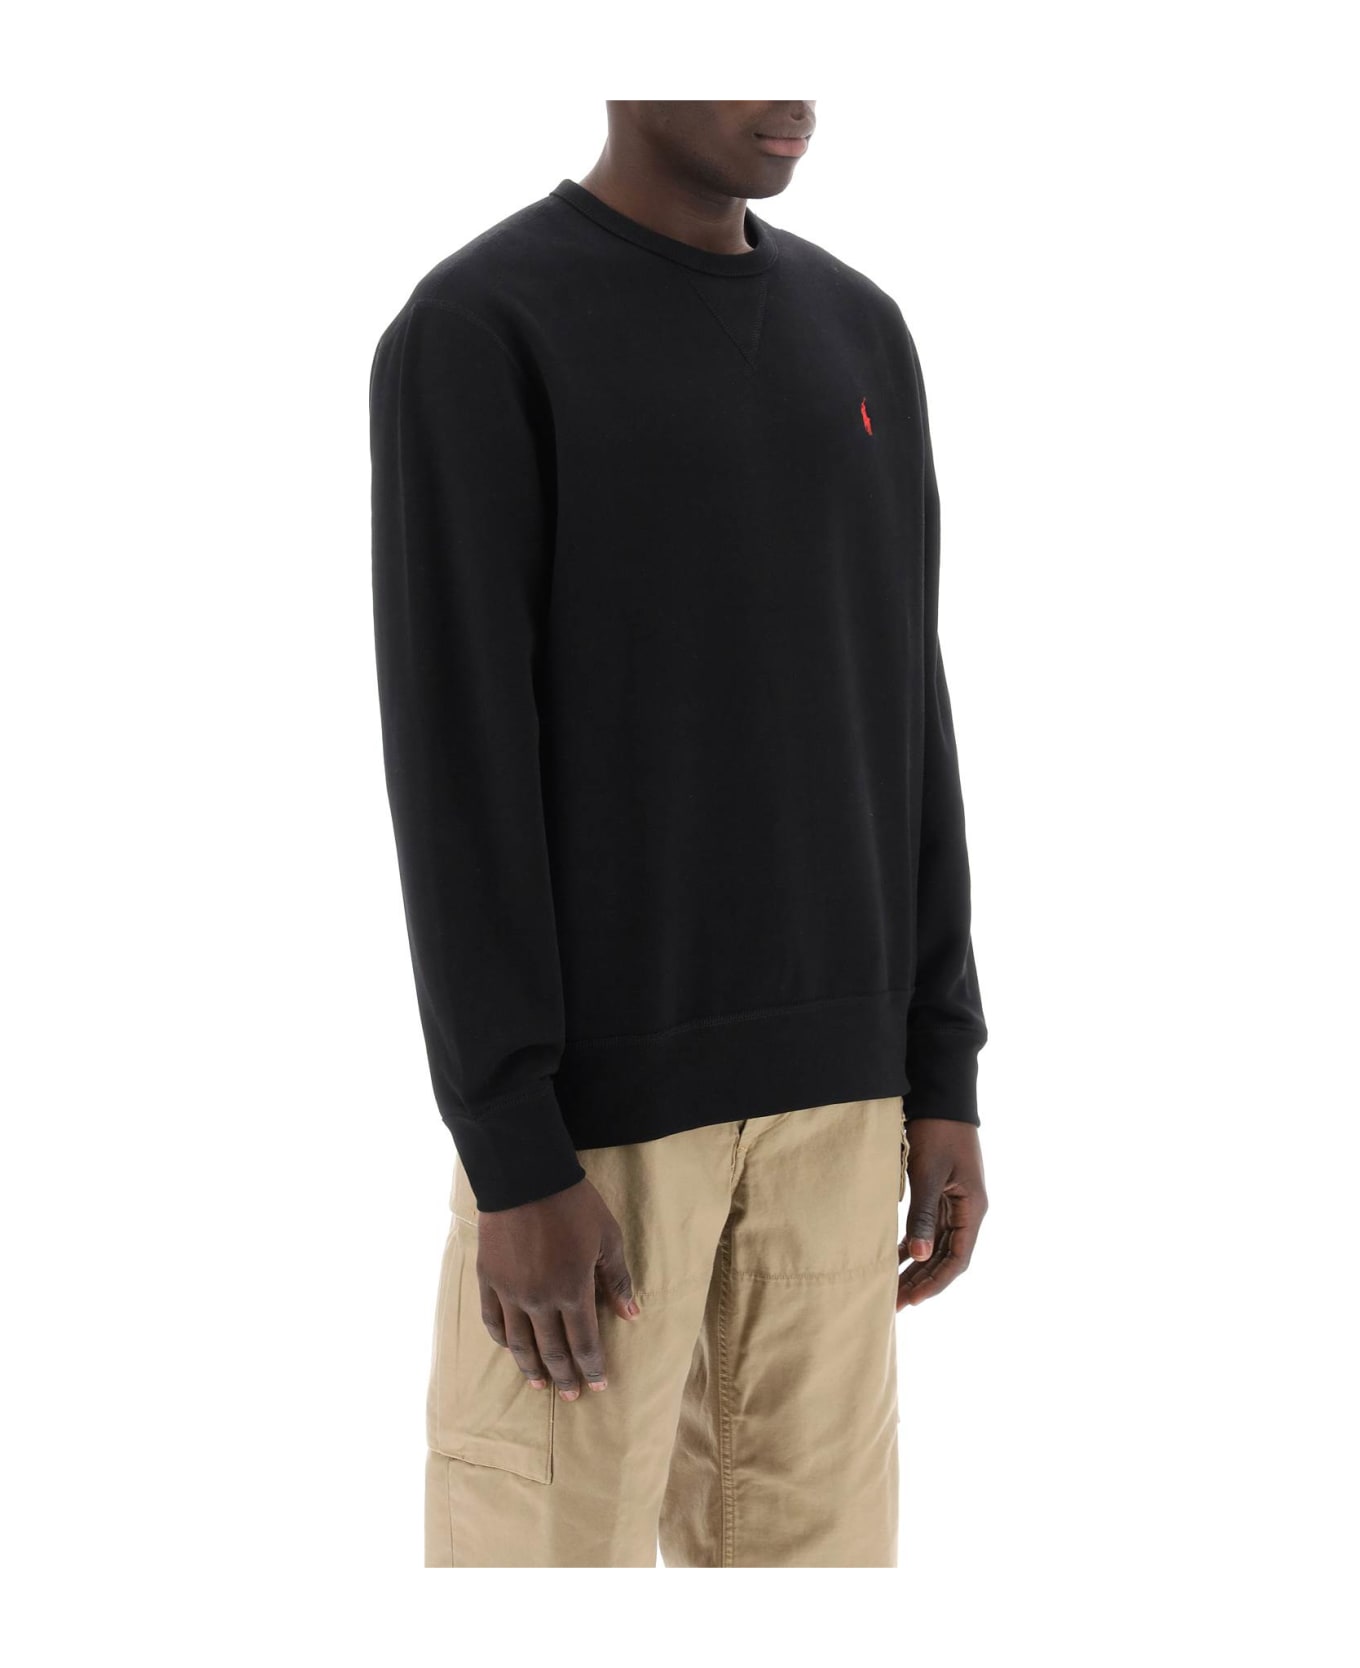 Polo Ralph Lauren Rl Sweatshirt - POLO BLACK (Black)